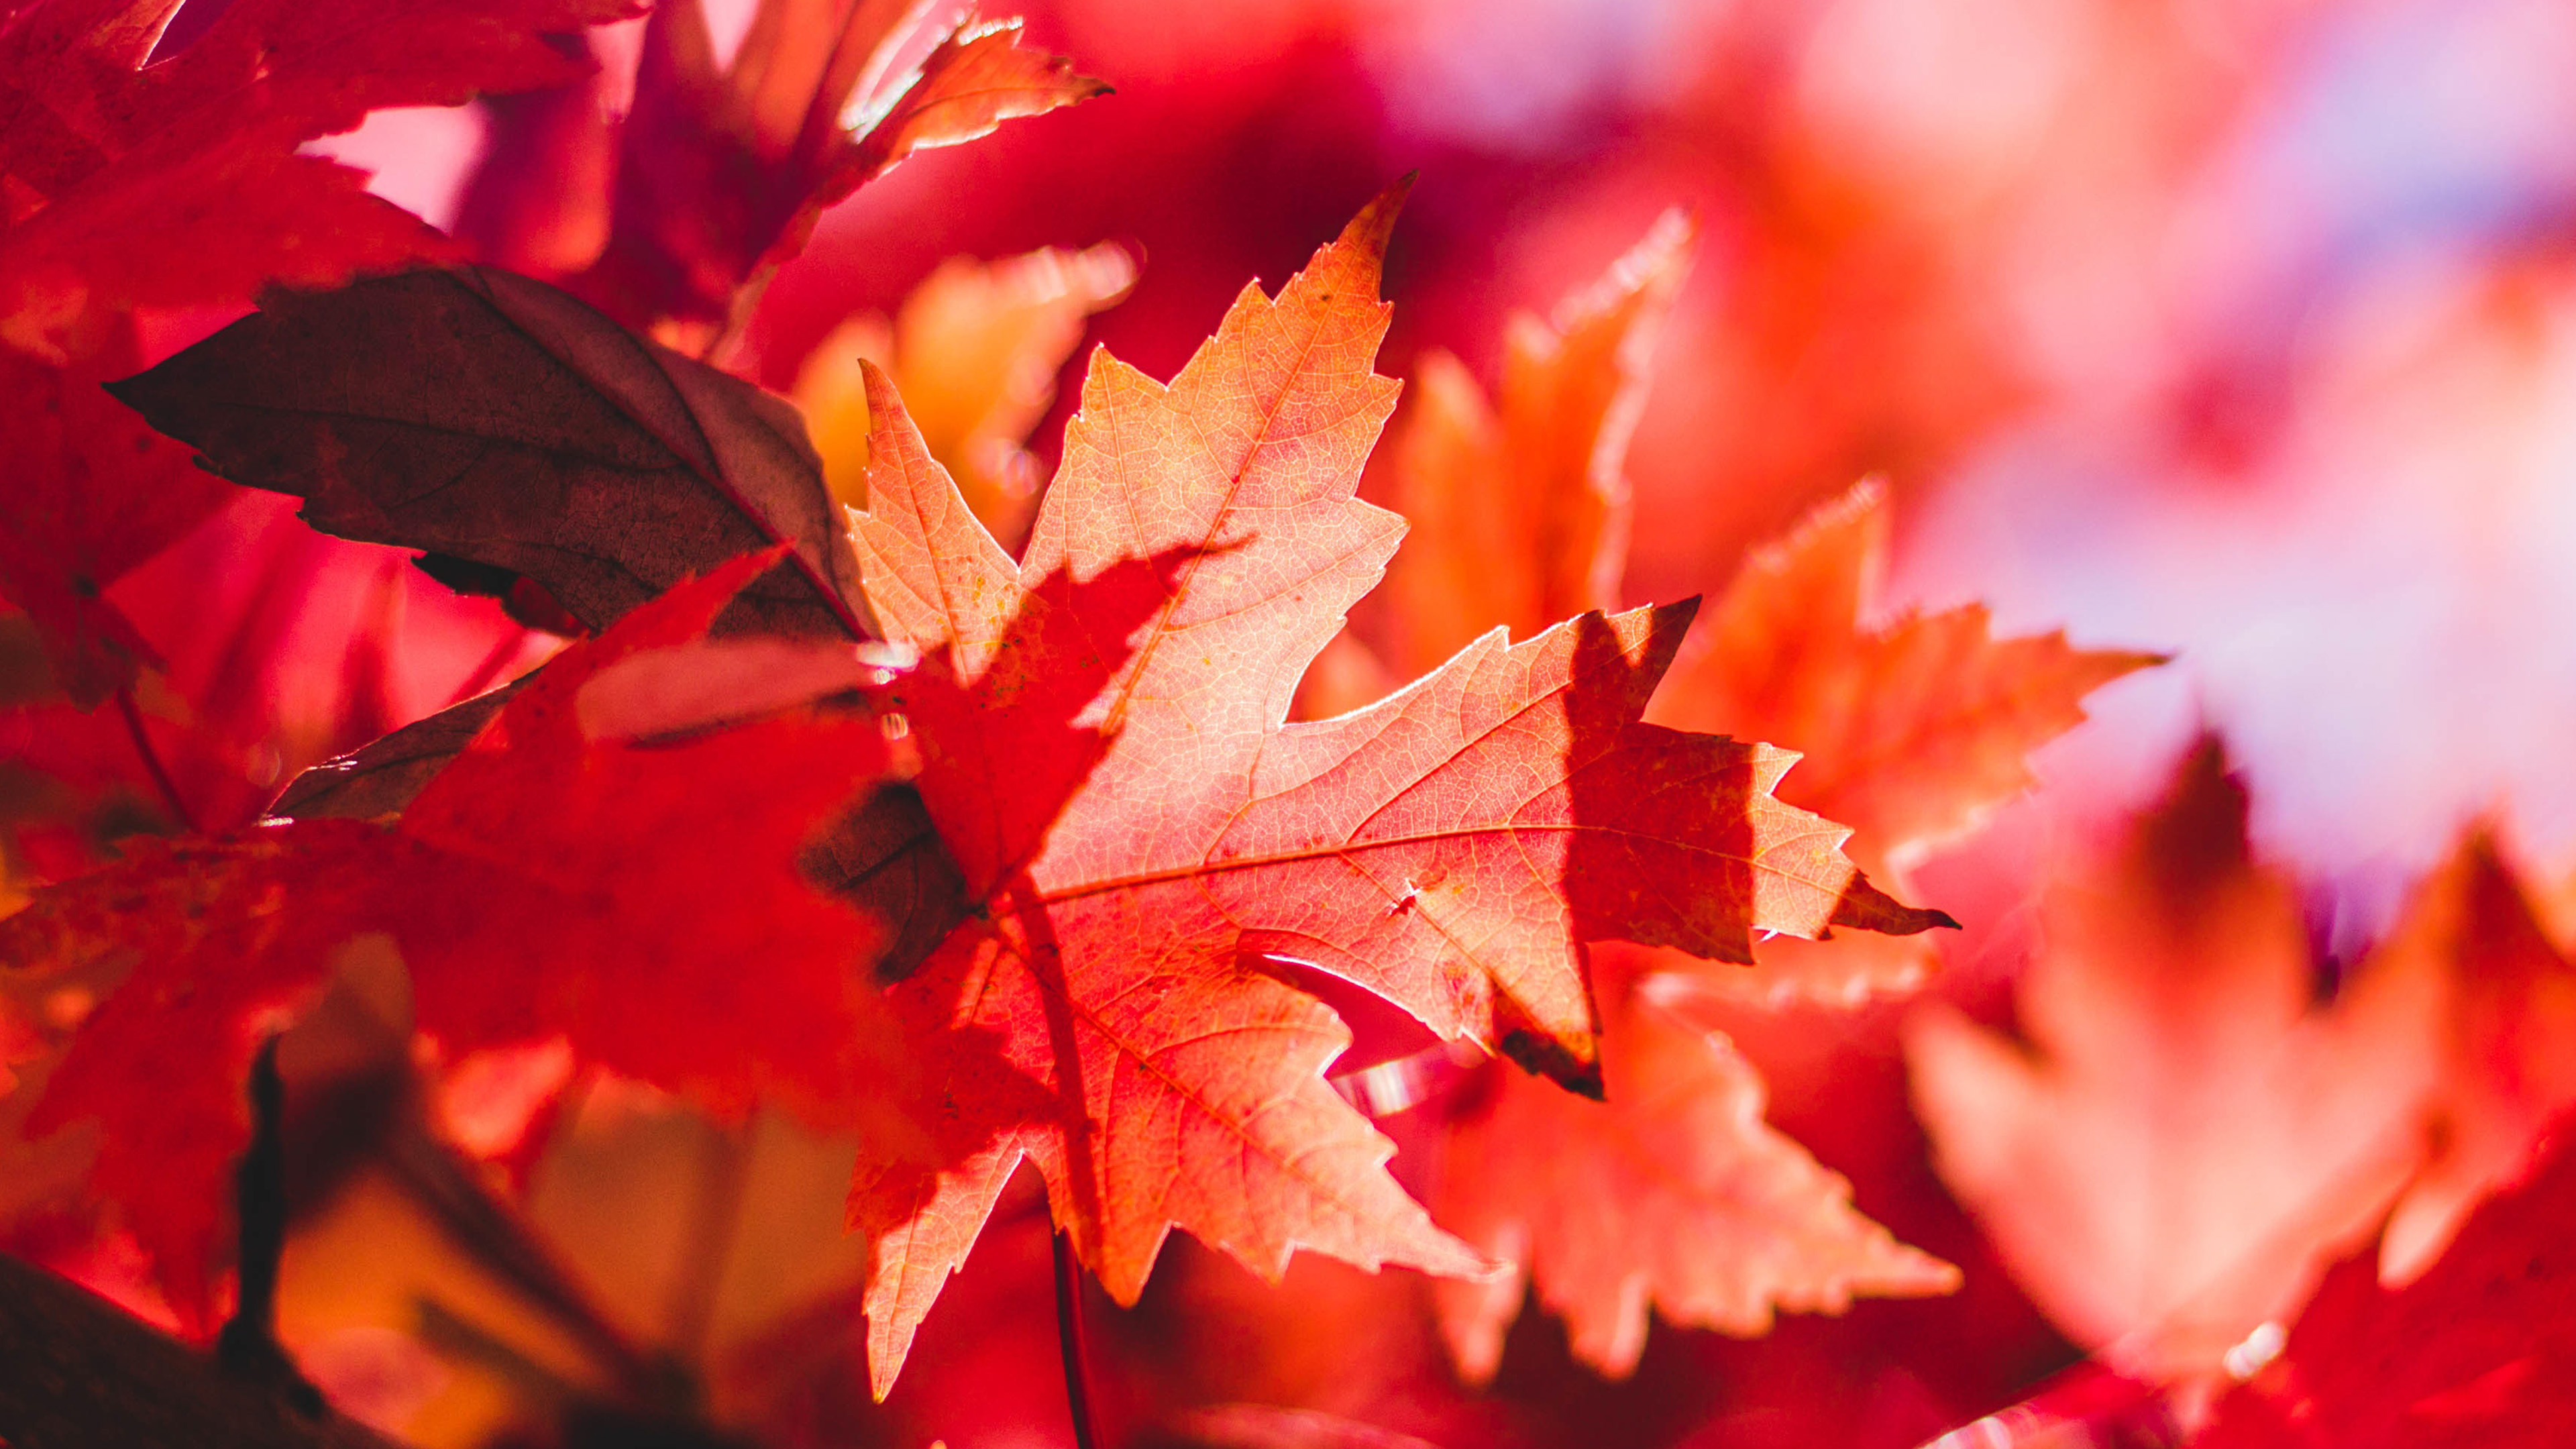 Maple leaf flower, Autumn beauty, Red fall vibes, Nature's elegance, 3840x2160 4K Desktop